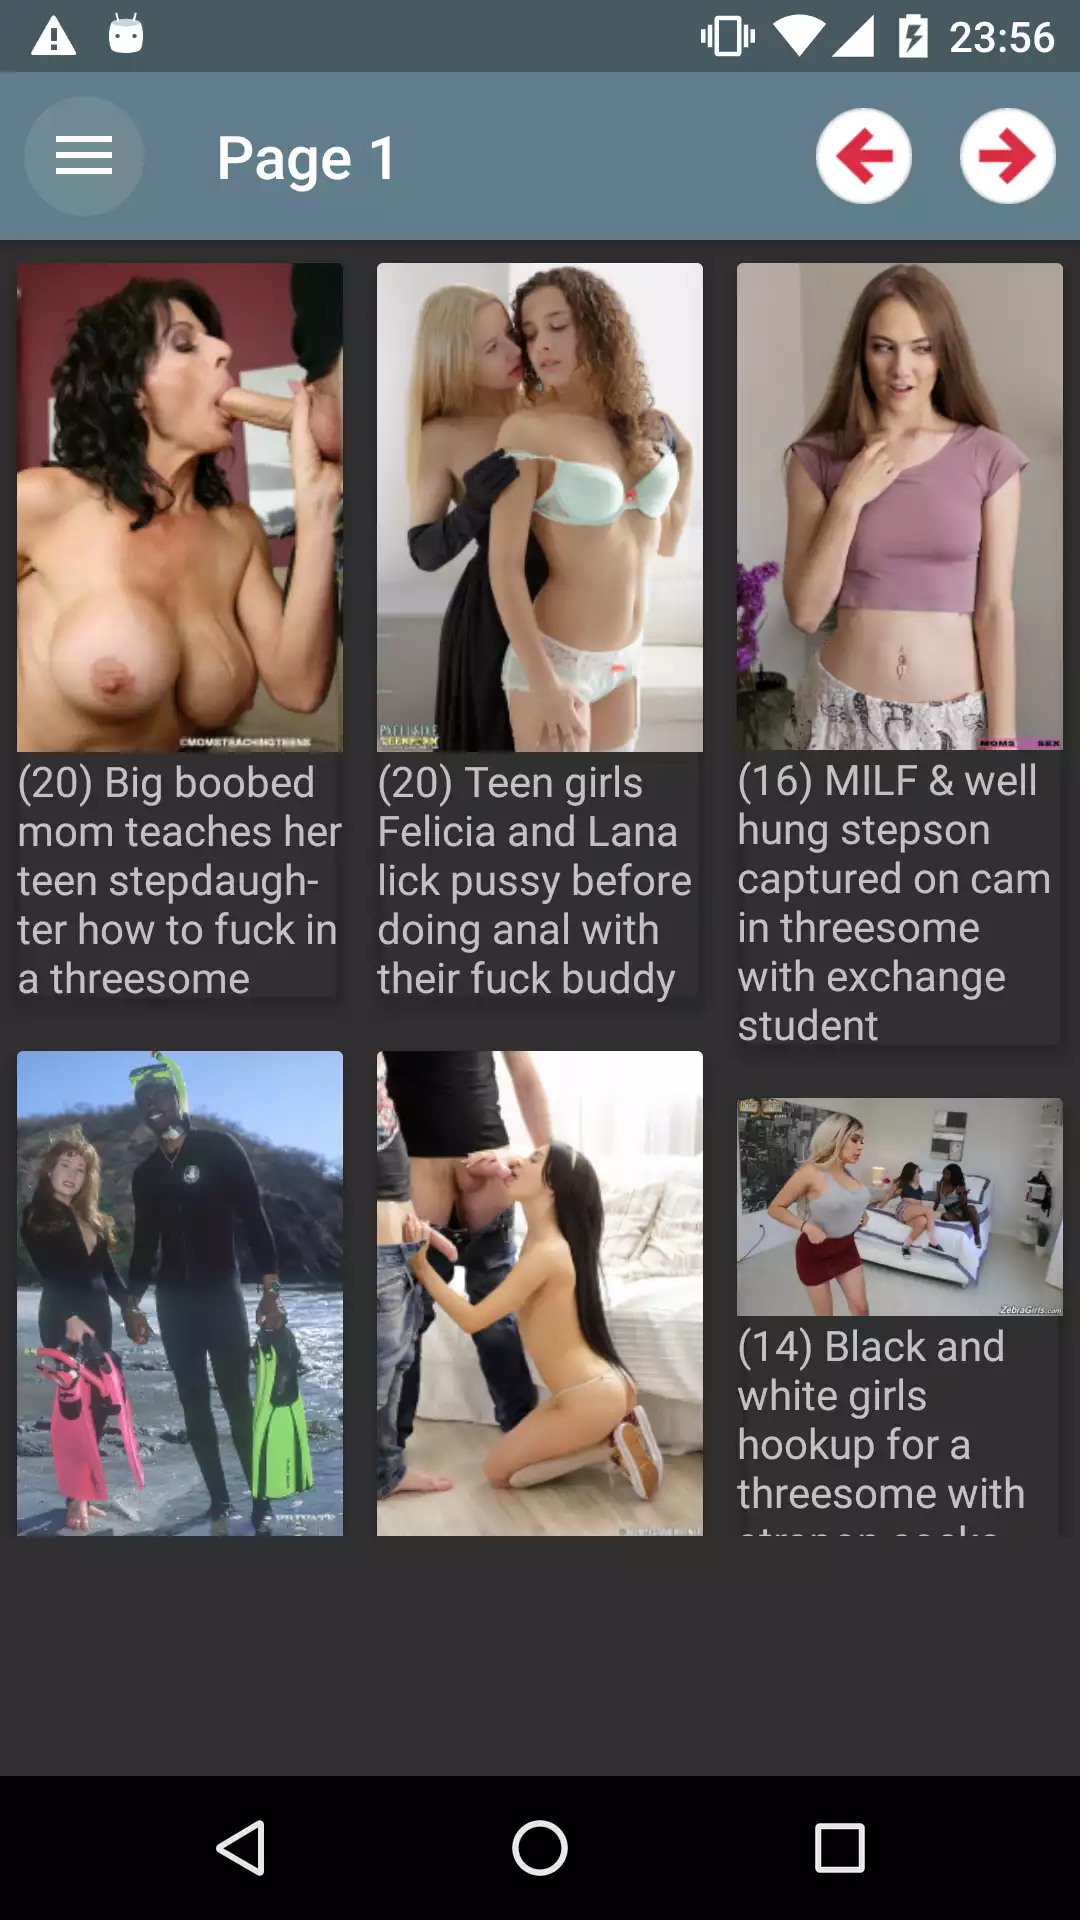 Threesome Fun aplicativos,sexy,gallery,hentei,galleries,pornstar,aplicaciones,hentai,app,anime,updates,download,erotic,apps,hot,wallpaper,best,apk,pics,pictures,porn,android